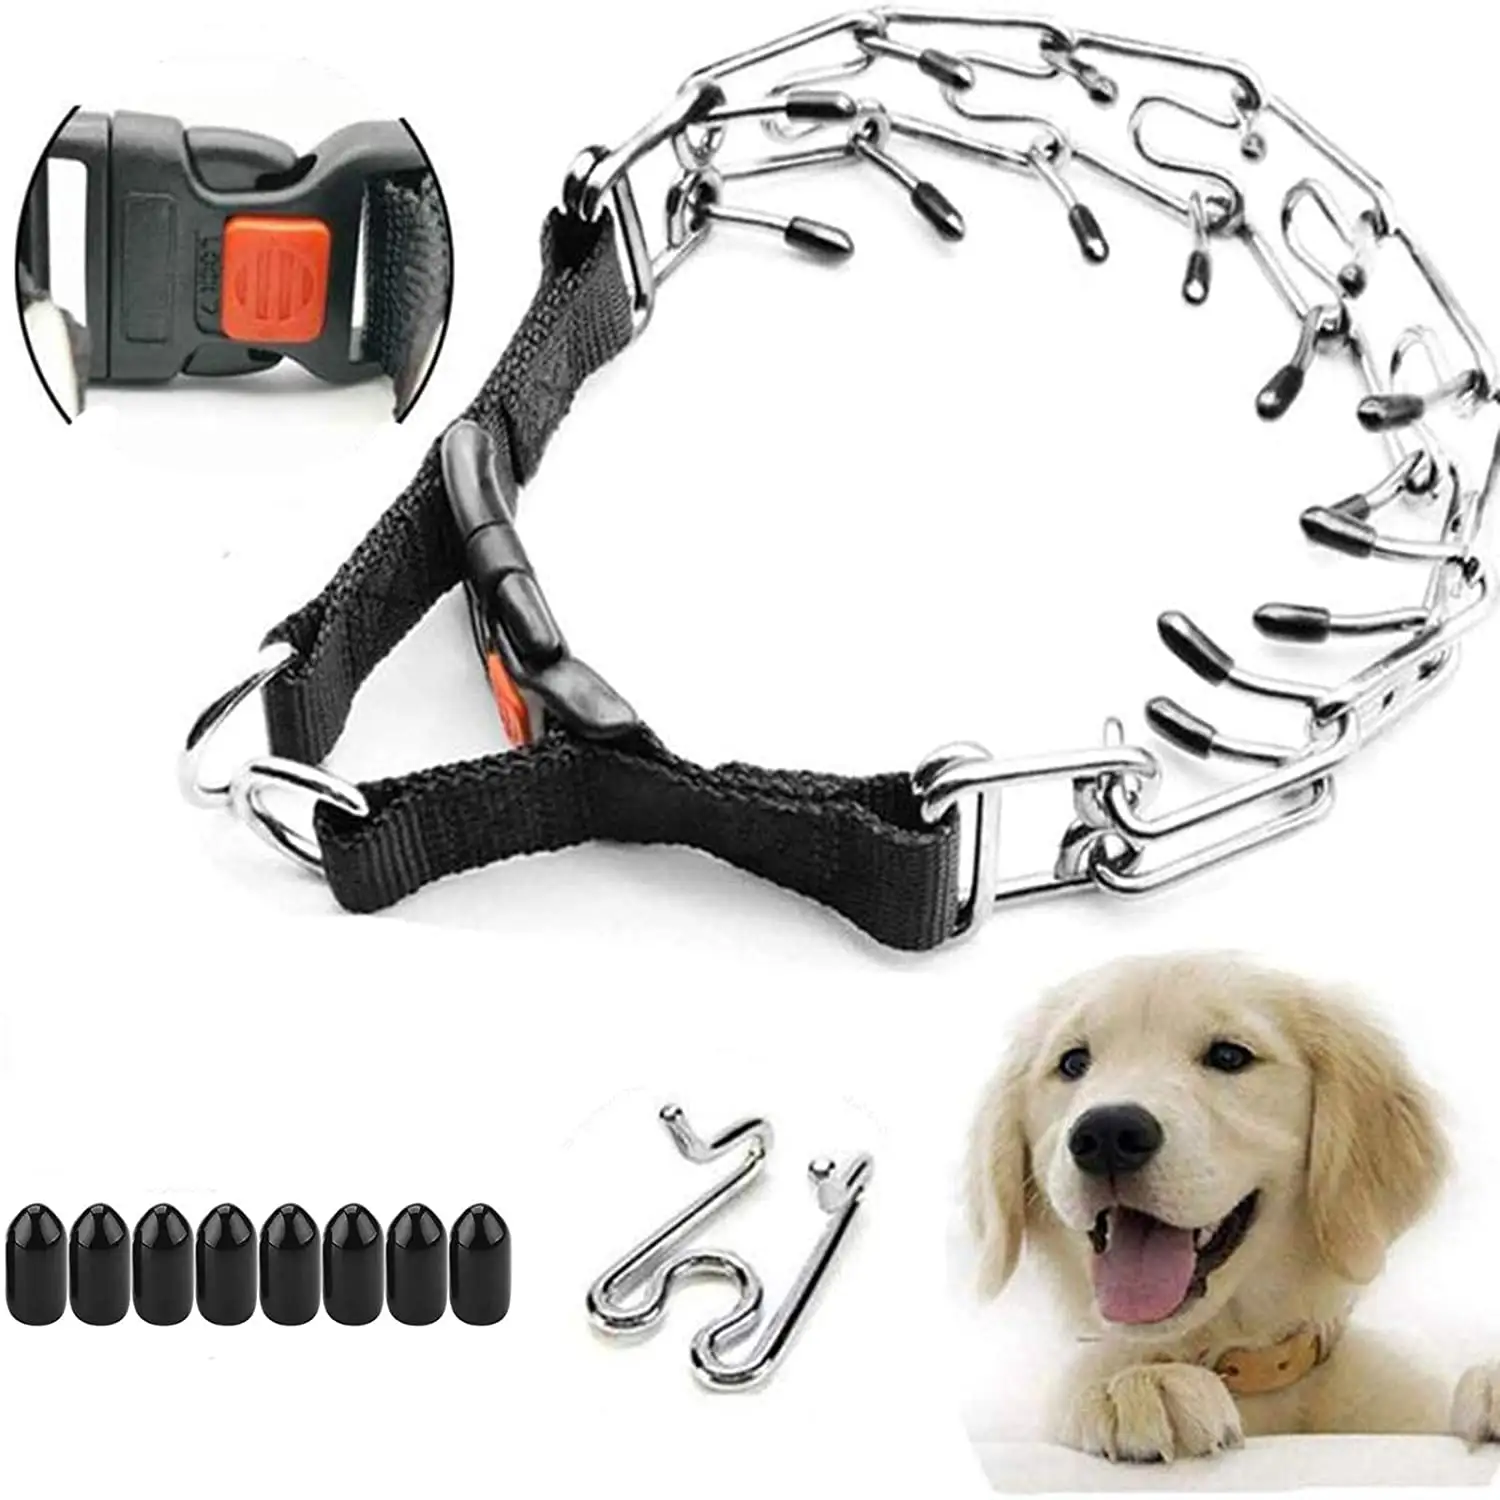 Amazon Hot Sale Dog Prong Pinch Adjustable Dog Training Collar Pinch Pet Choke Collar with Comfort Rubber Tips